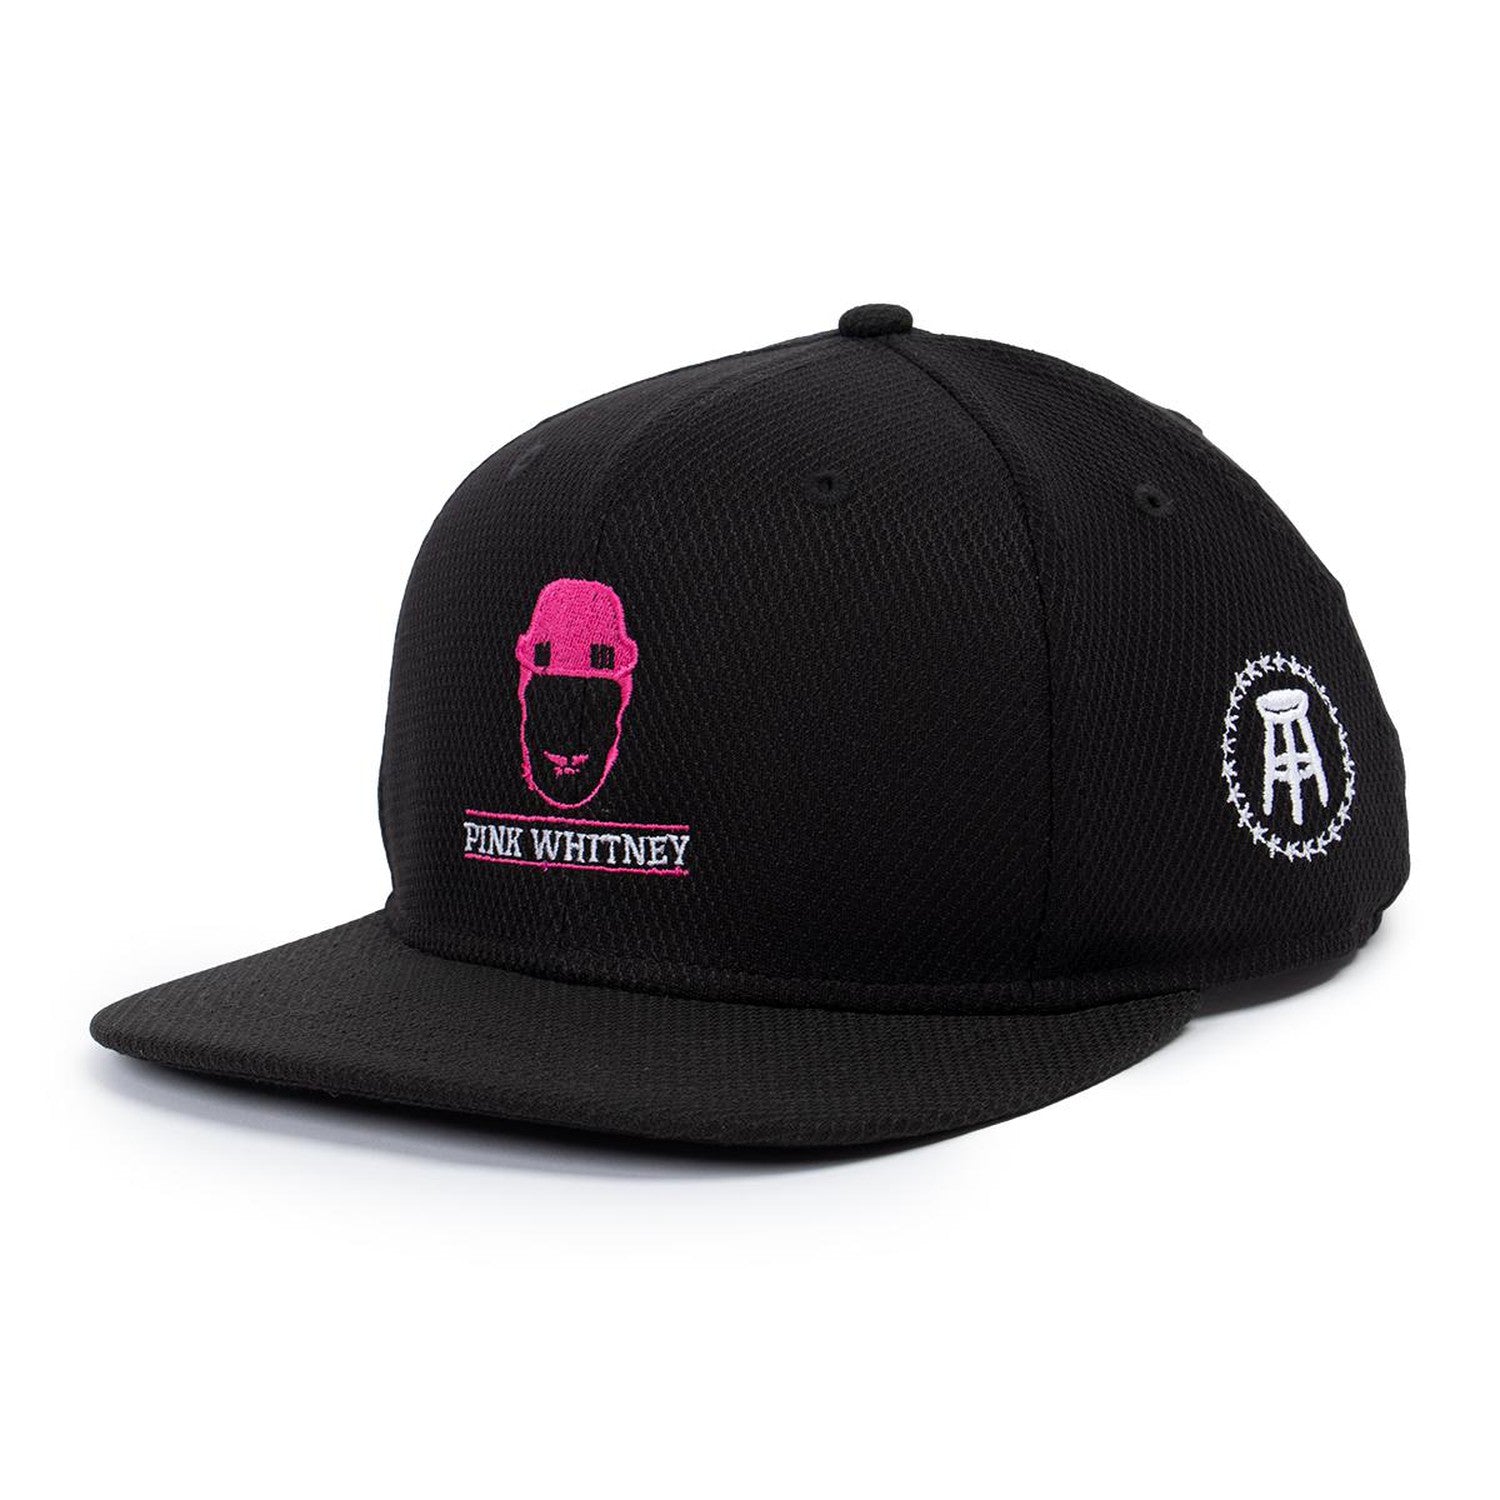 Pink Whitney Snapback Hat-Hats-Pink Whitney-One Size-Black-Barstool Sports